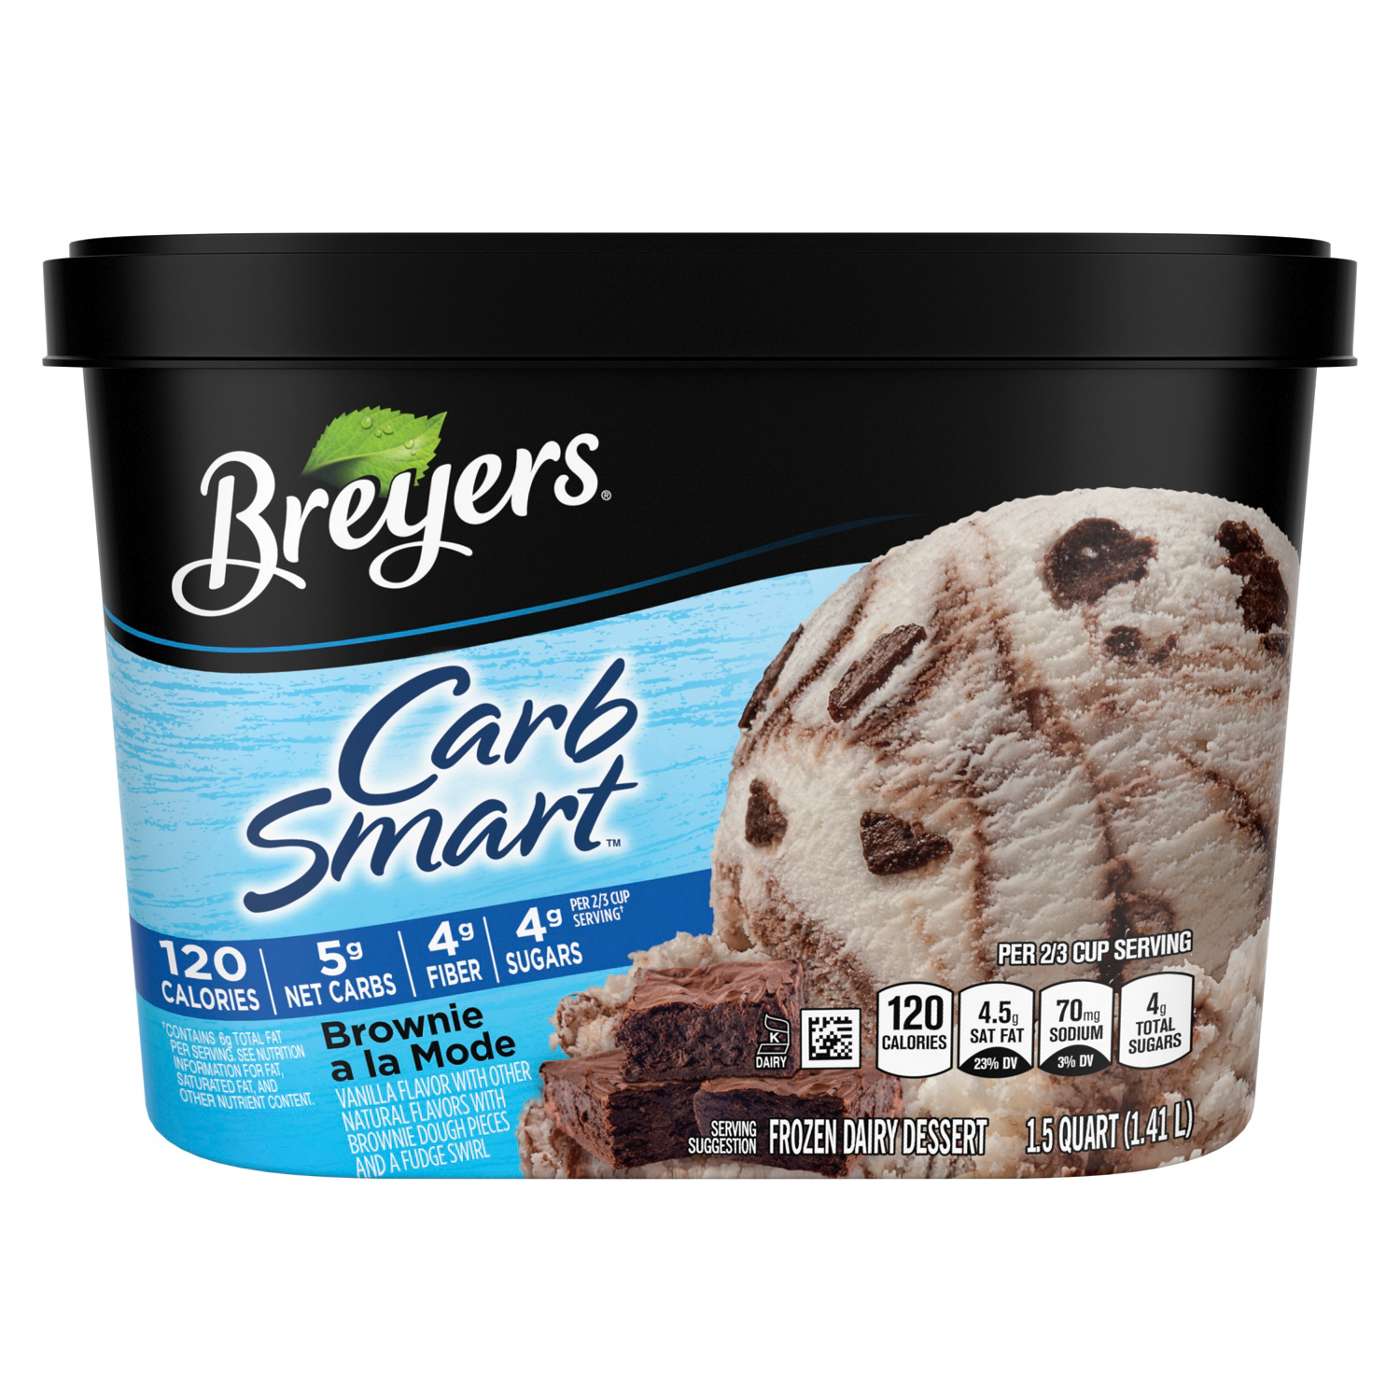 Breyers Carb Smart Brownie Ala Mode Ice Cream; image 1 of 2